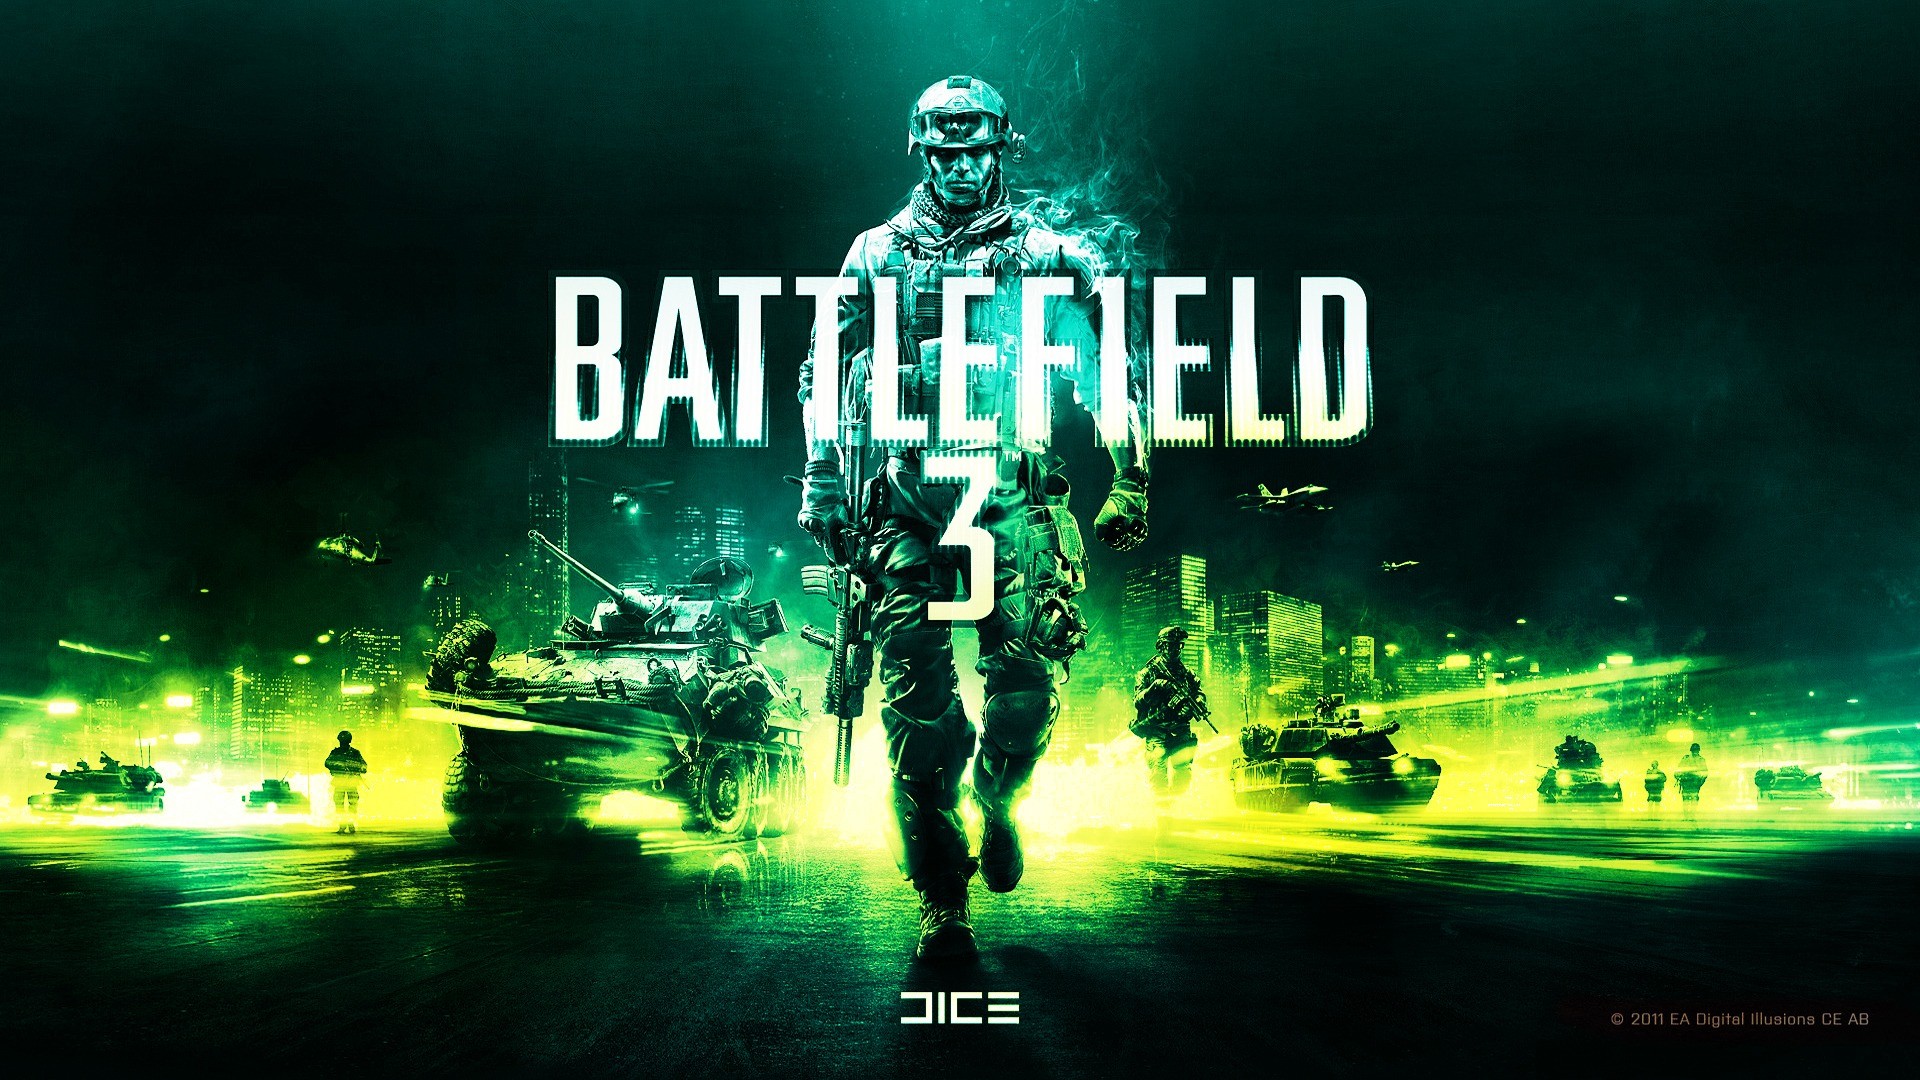 Battlefield 3, Video Games, Dice Wallpaper